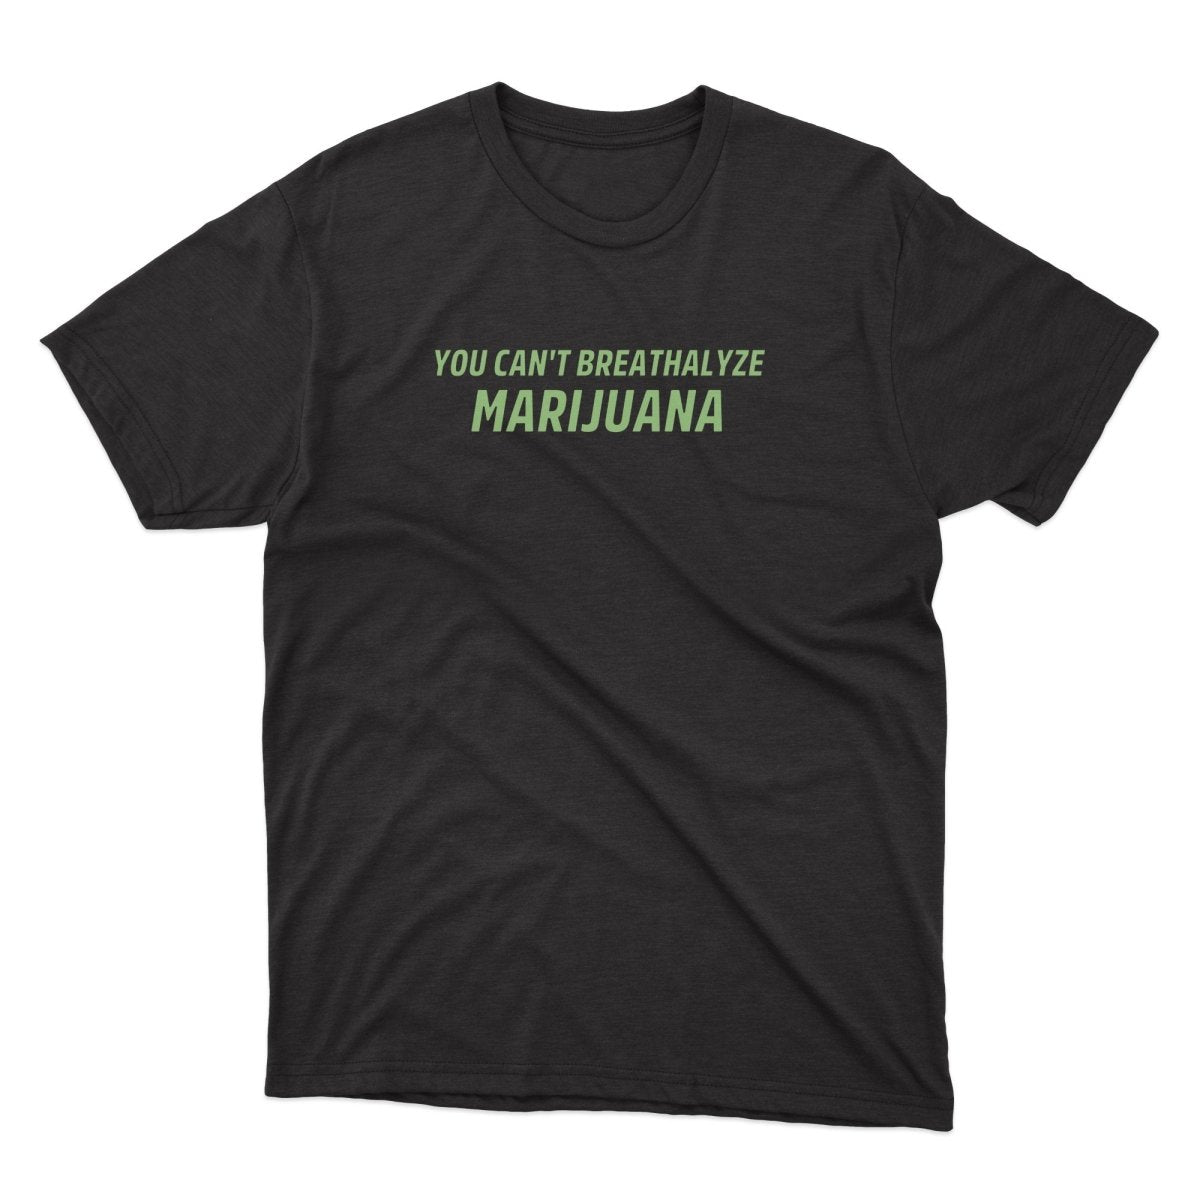 You Can't Breathalyze Marijuana Shirt - stickerbullYou Can't Breathalyze Marijuana ShirtShirtsPrintifystickerbull22521620017041875898BlackSa black t - shirt that says you can't breathe marijuana